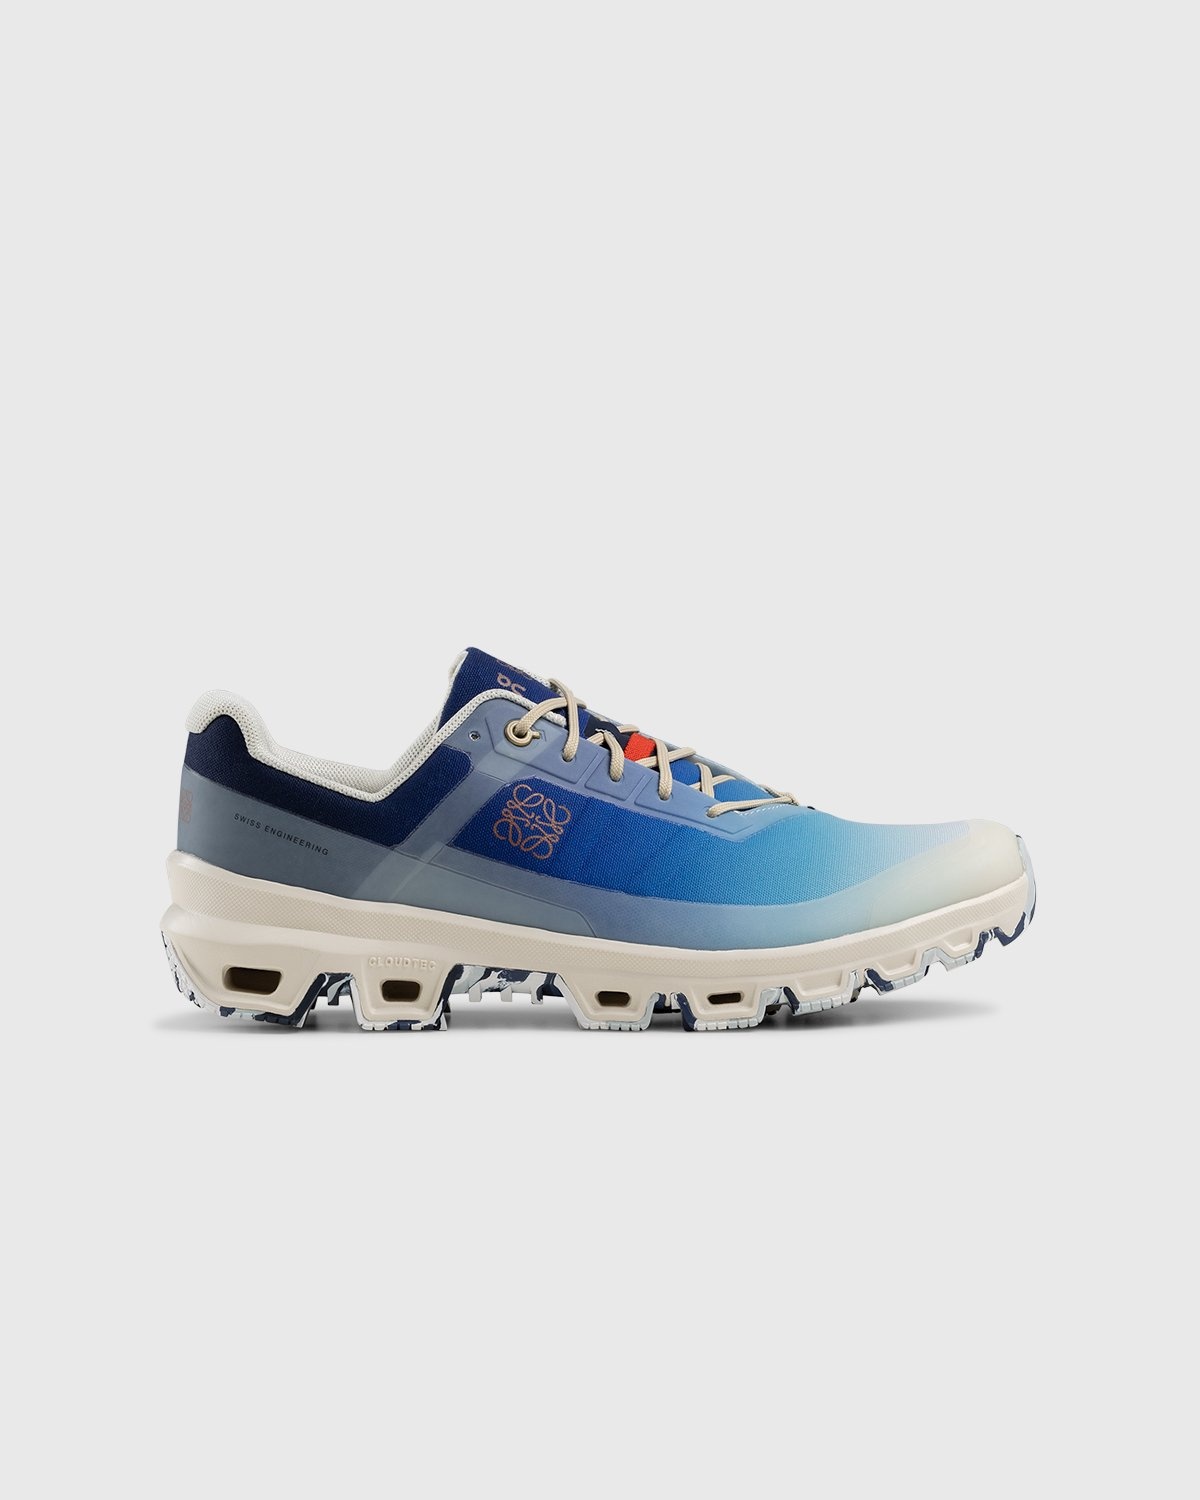 Loewe x On – Men's Cloudventure Gradient Blue - Low Top Sneakers - Blue - Image 1